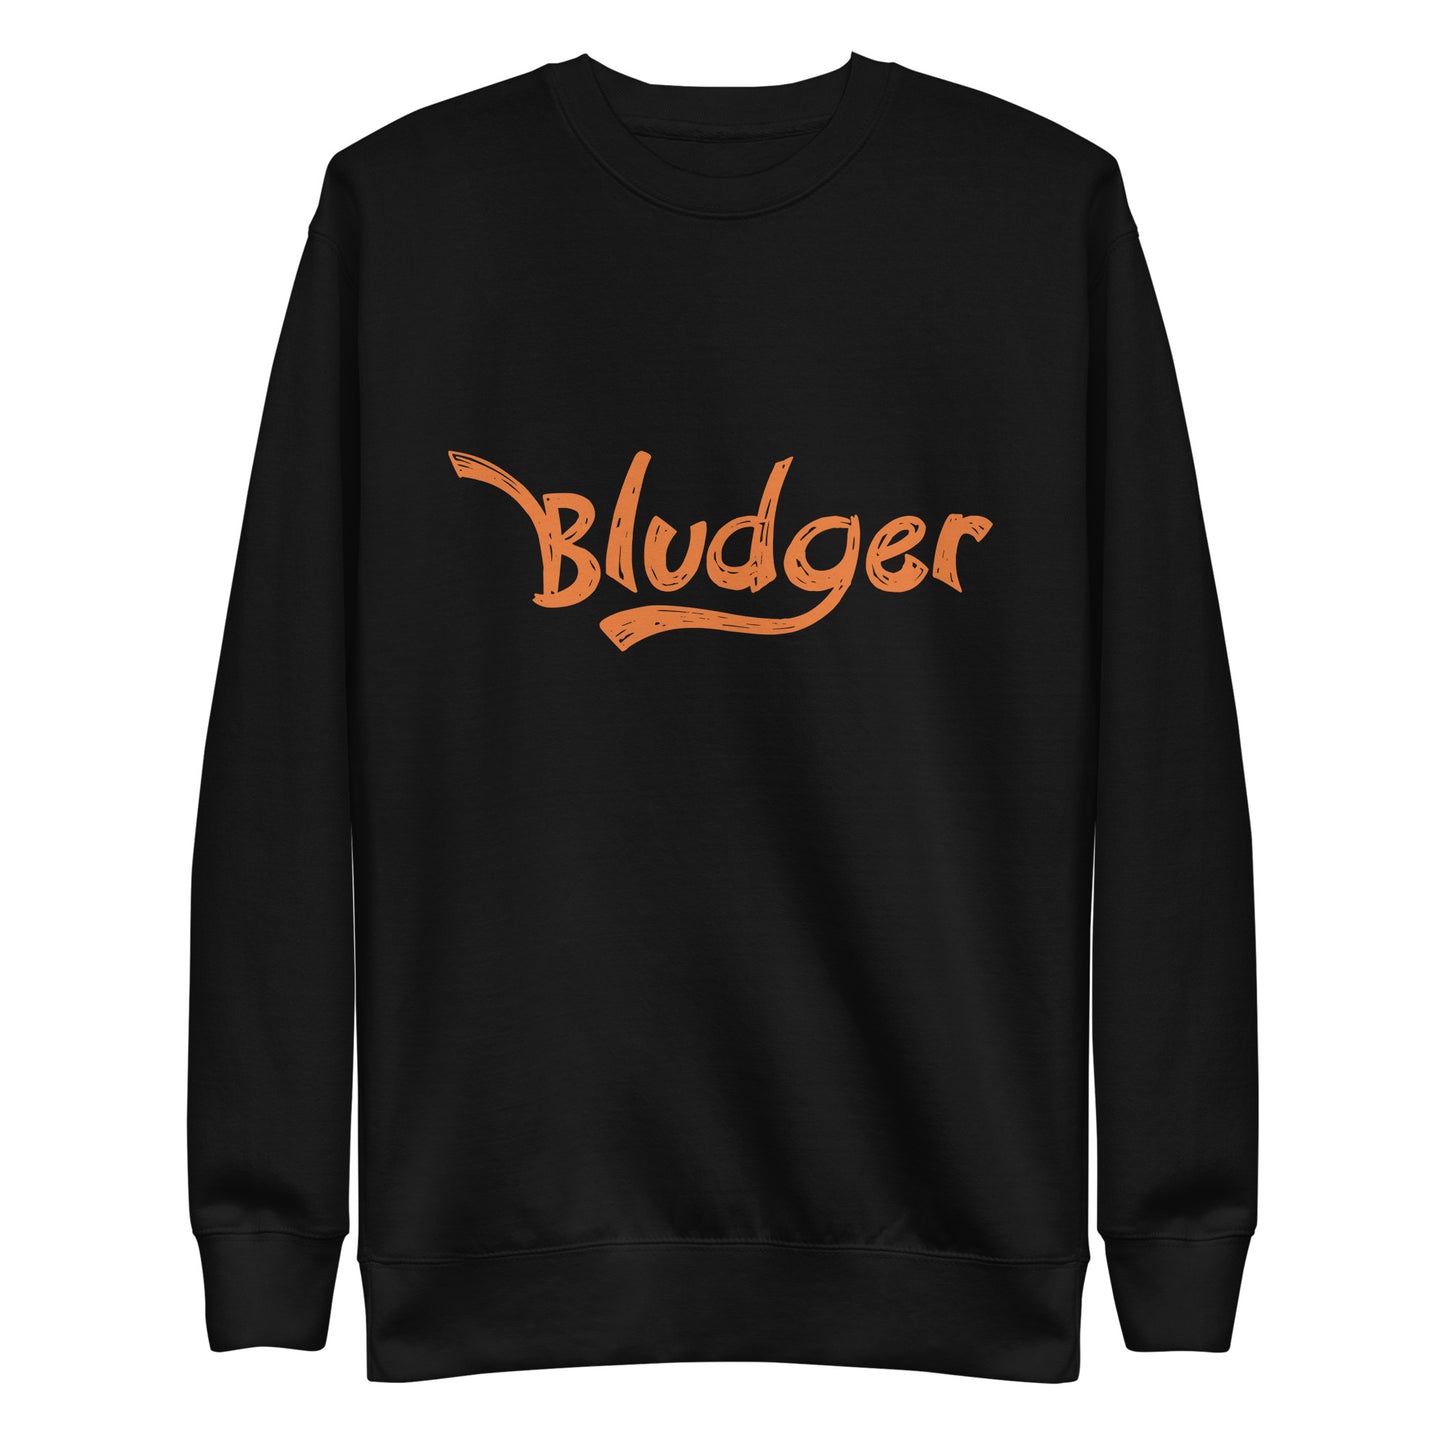 Bludger - Sustainably Made Sweatshirt